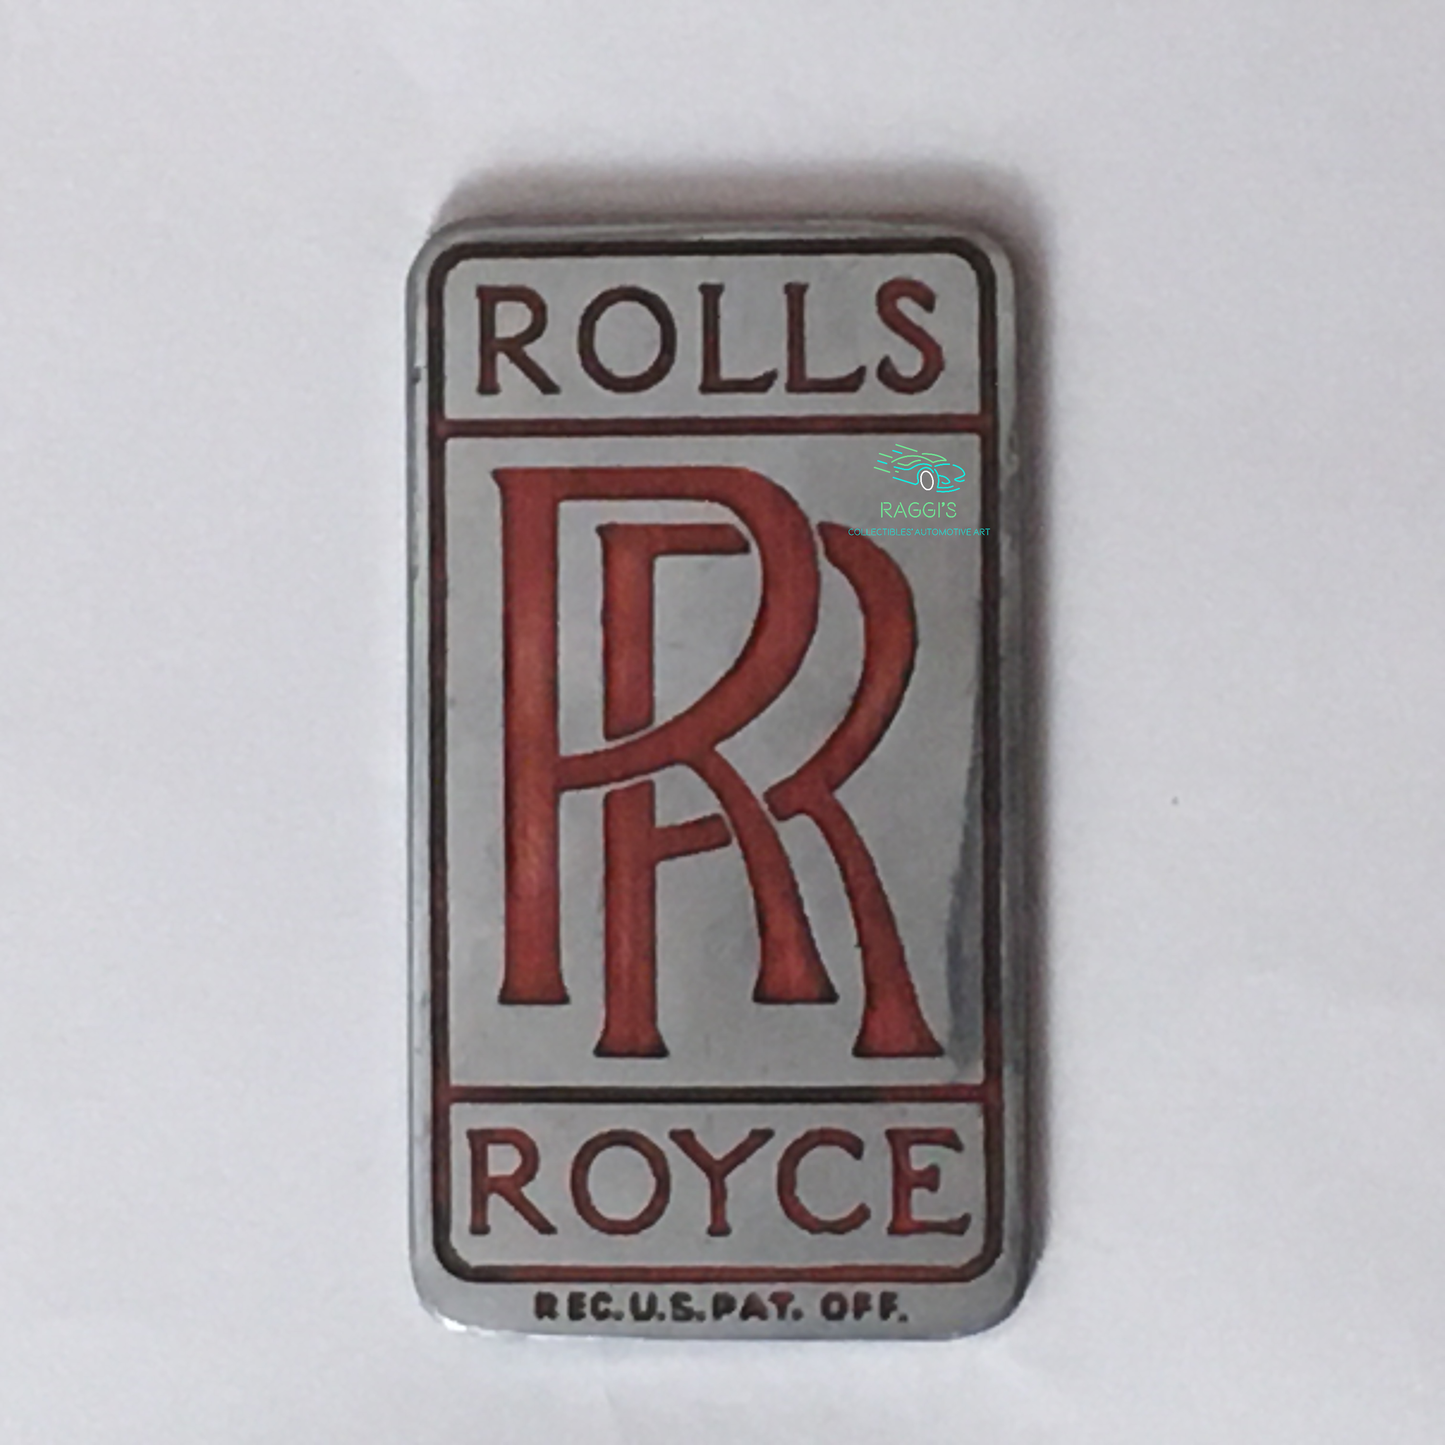 Rolls-Royce, Original Rolls-Royce of America Emblem Mounted on a Springfield Rolls-Royce, Extremely Rare